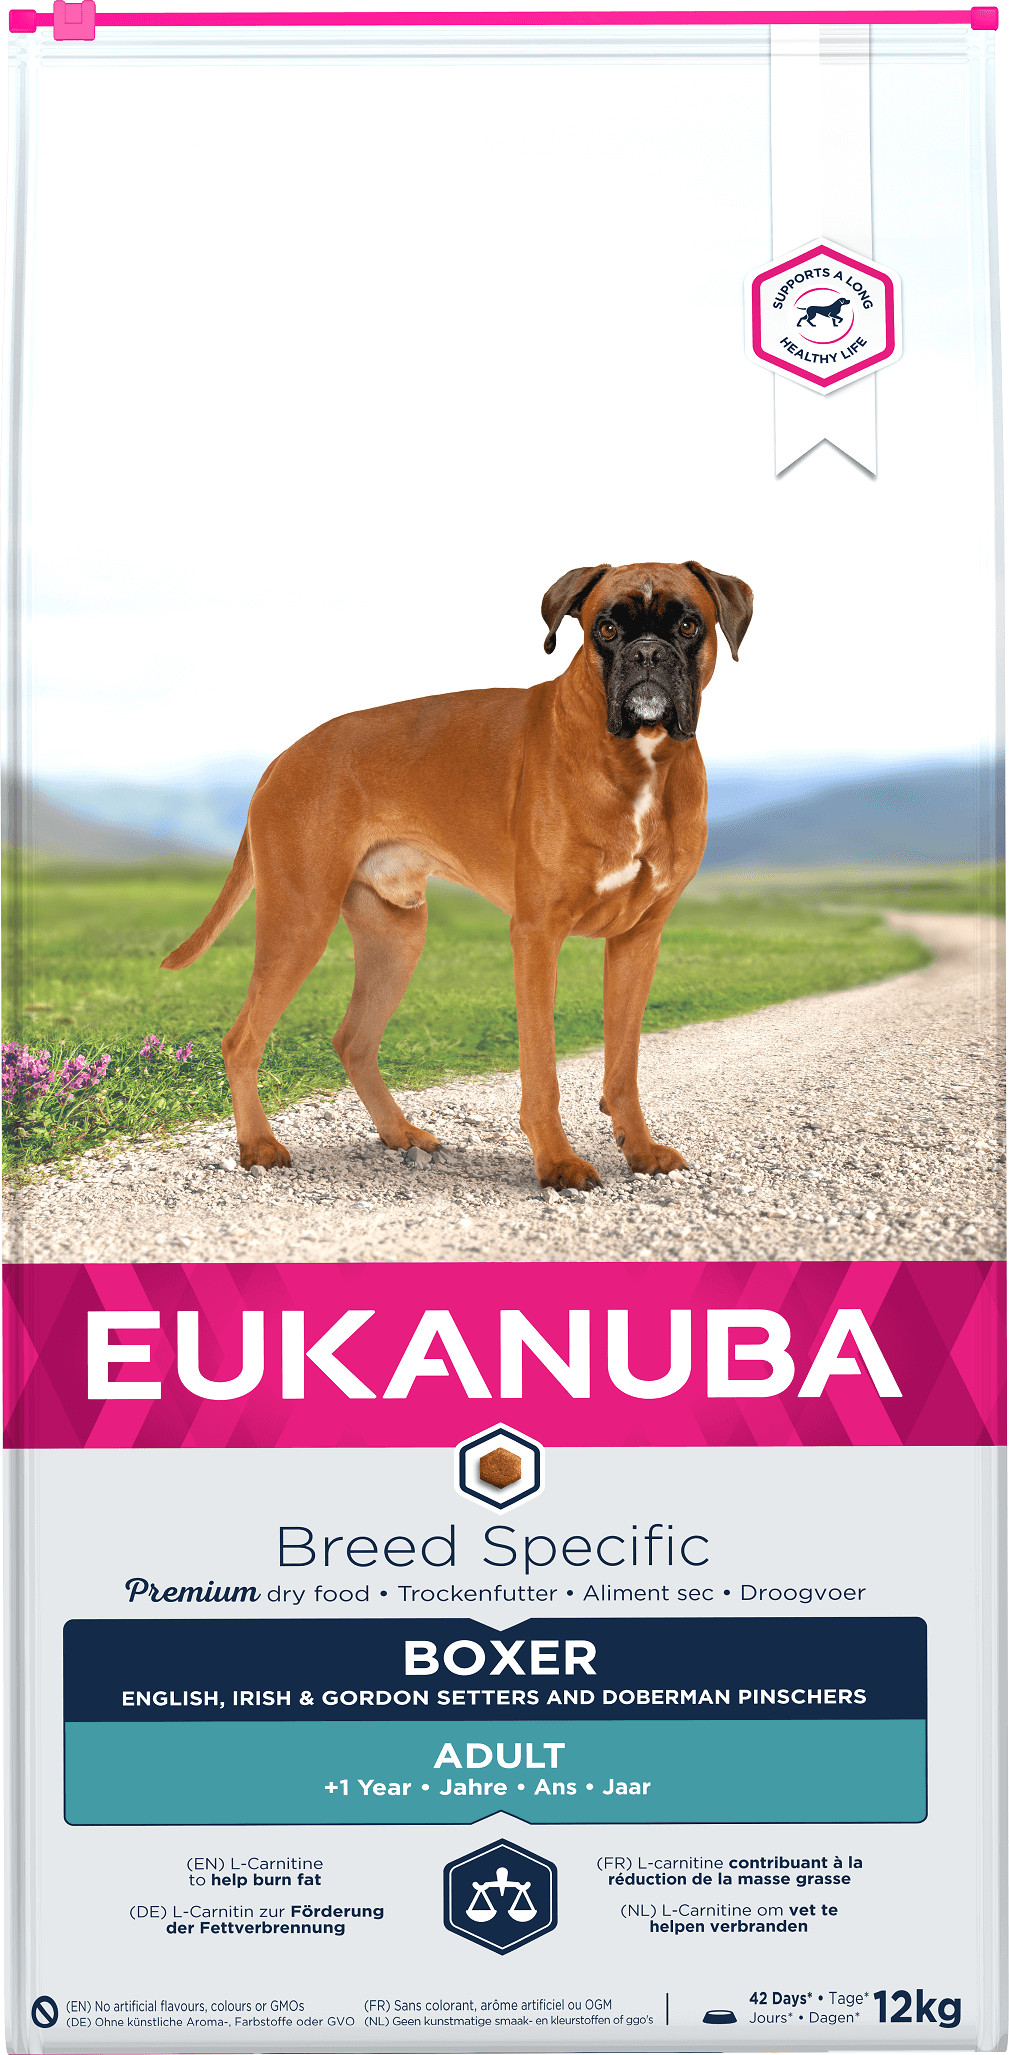 drøm detektor Endeløs Eukanuba Boxer hundefoder | Billigt hos Brekz